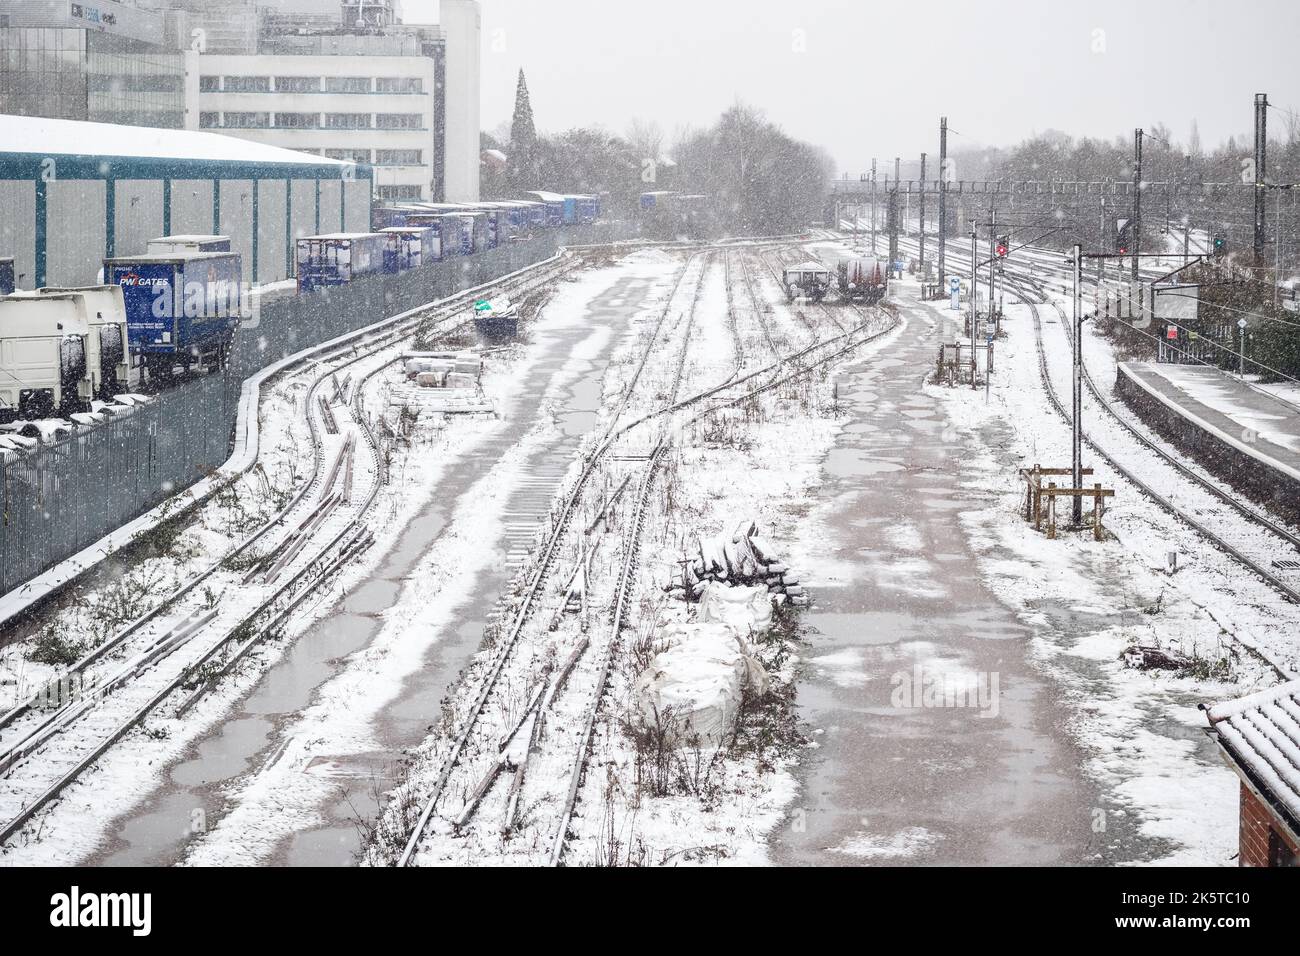 Welwyn Garden City, UK - 27 December, 2017 - Welwyn Garden City railway station and Broadwater industrial area covered in winter snow Stock Photo